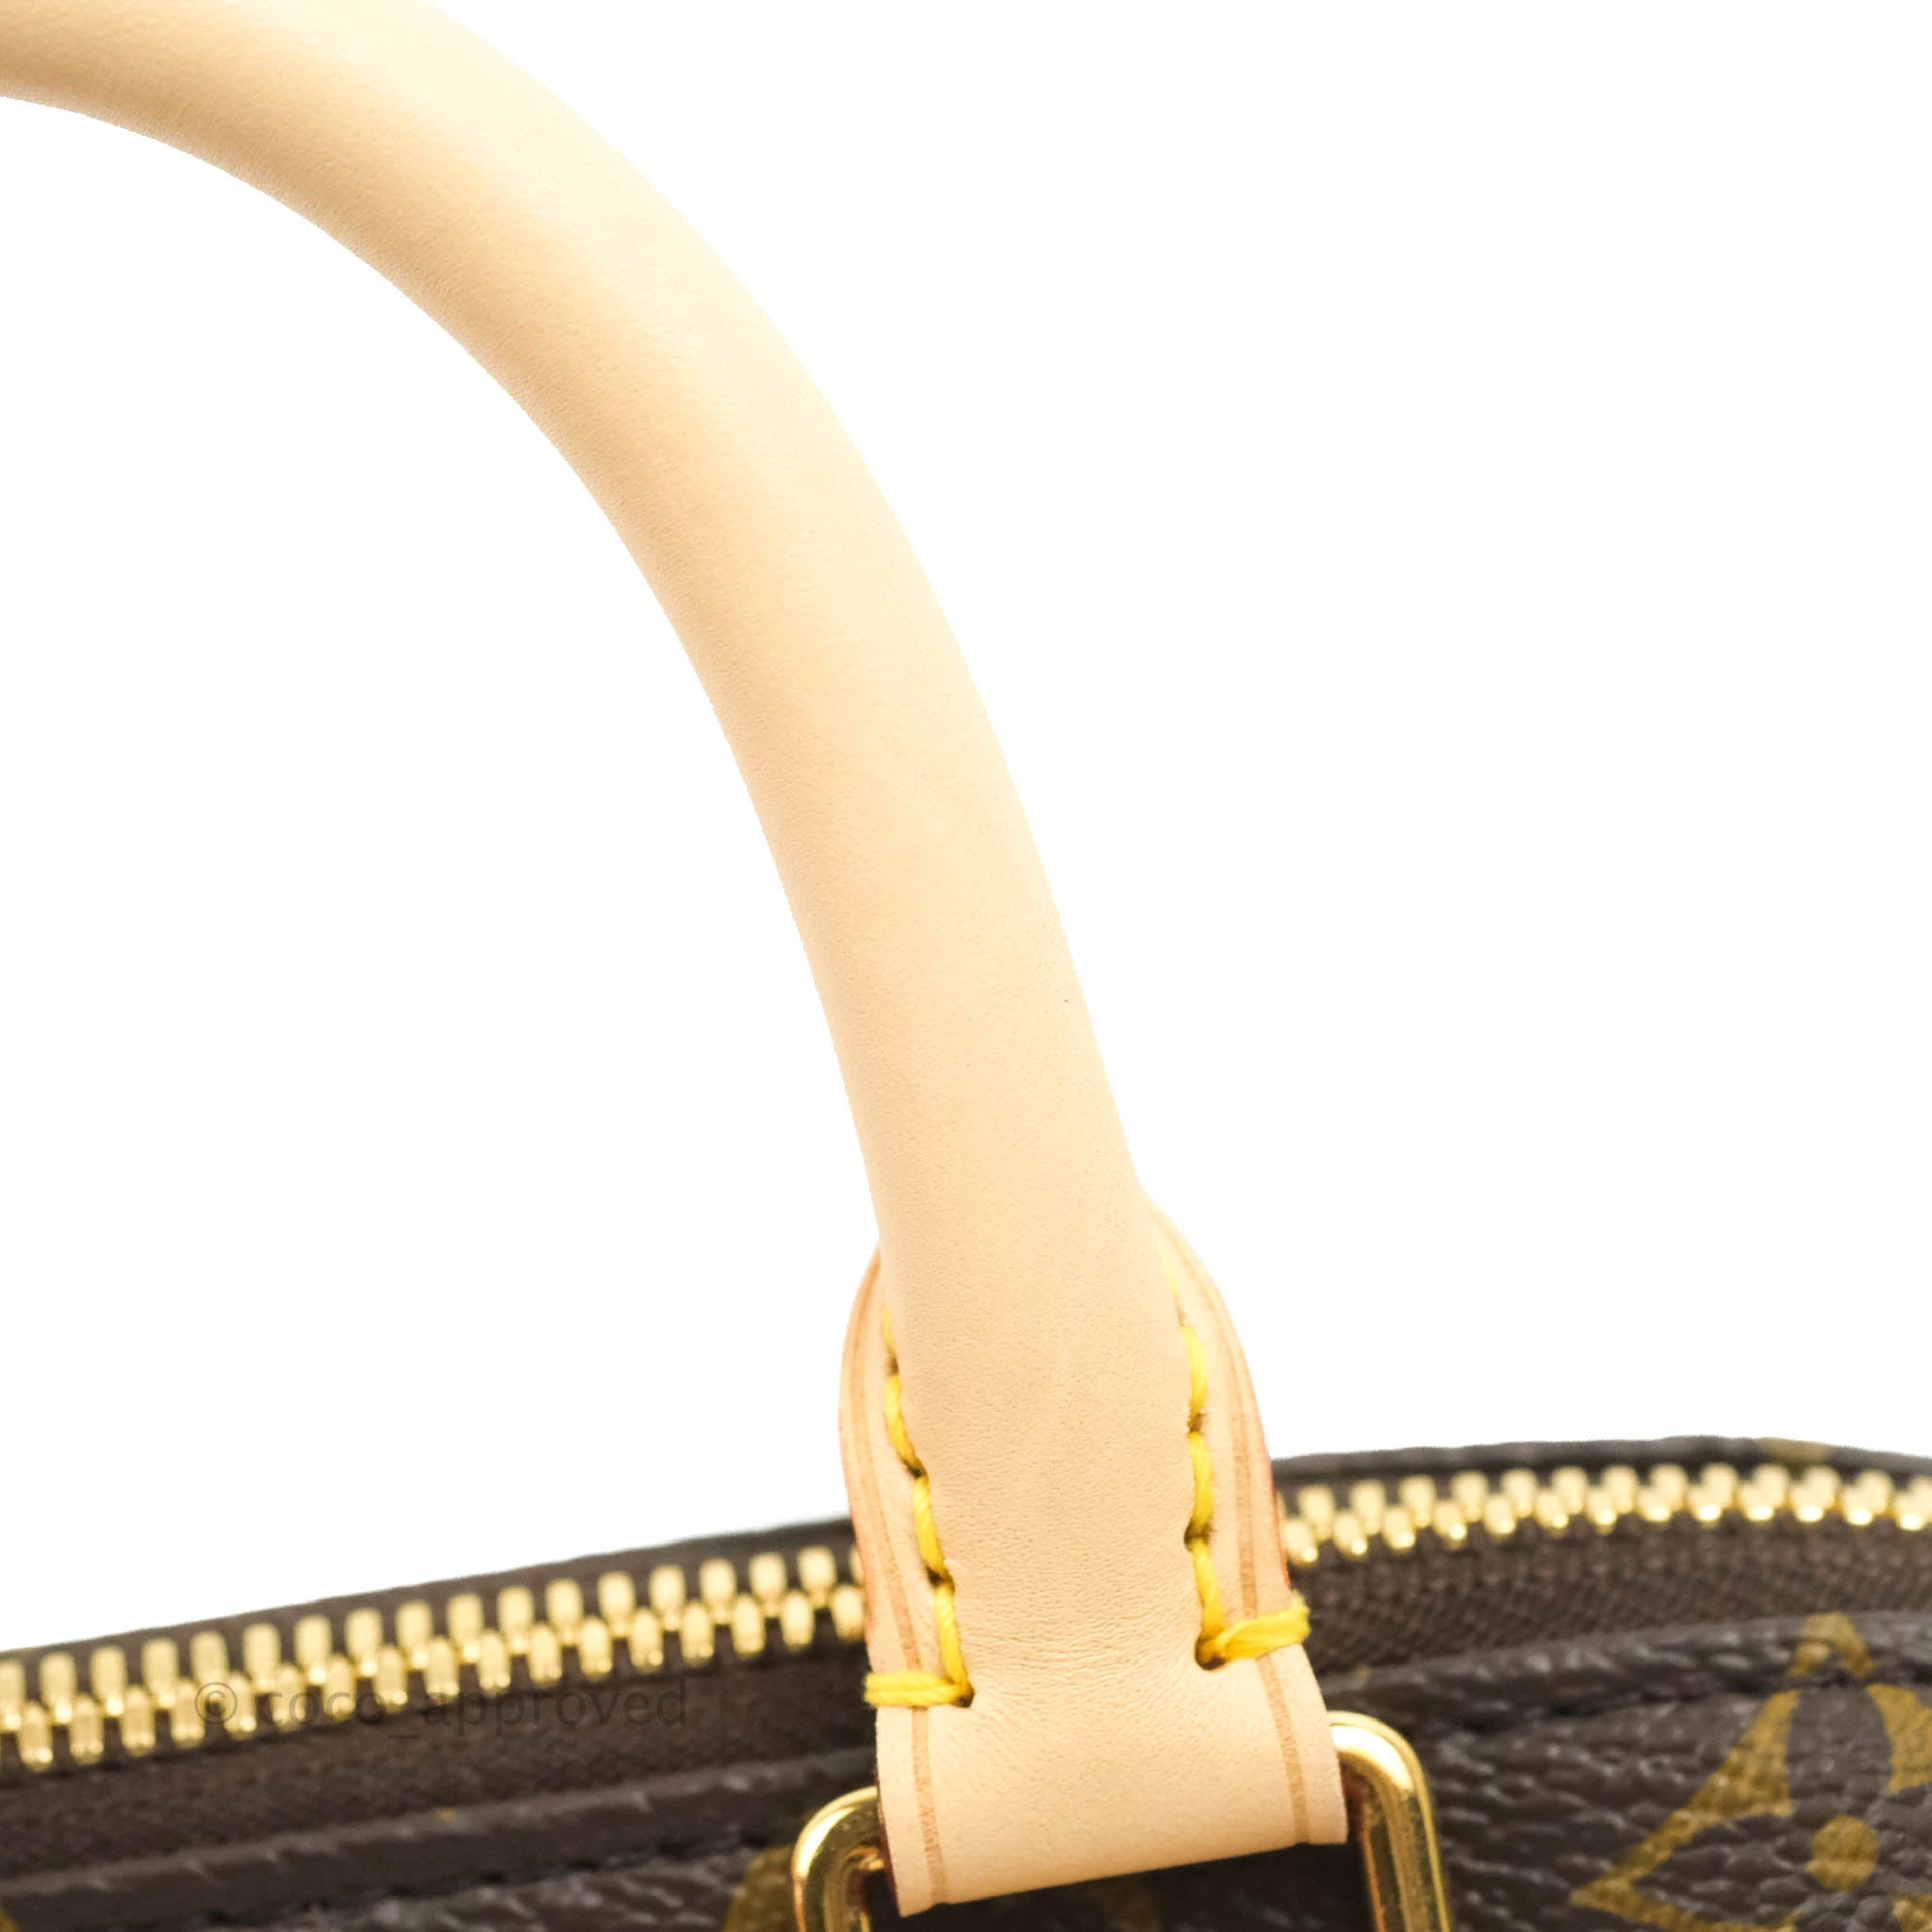 Speedy 20 Bandouliere W/O Strap Monogram – Keeks Designer Handbags